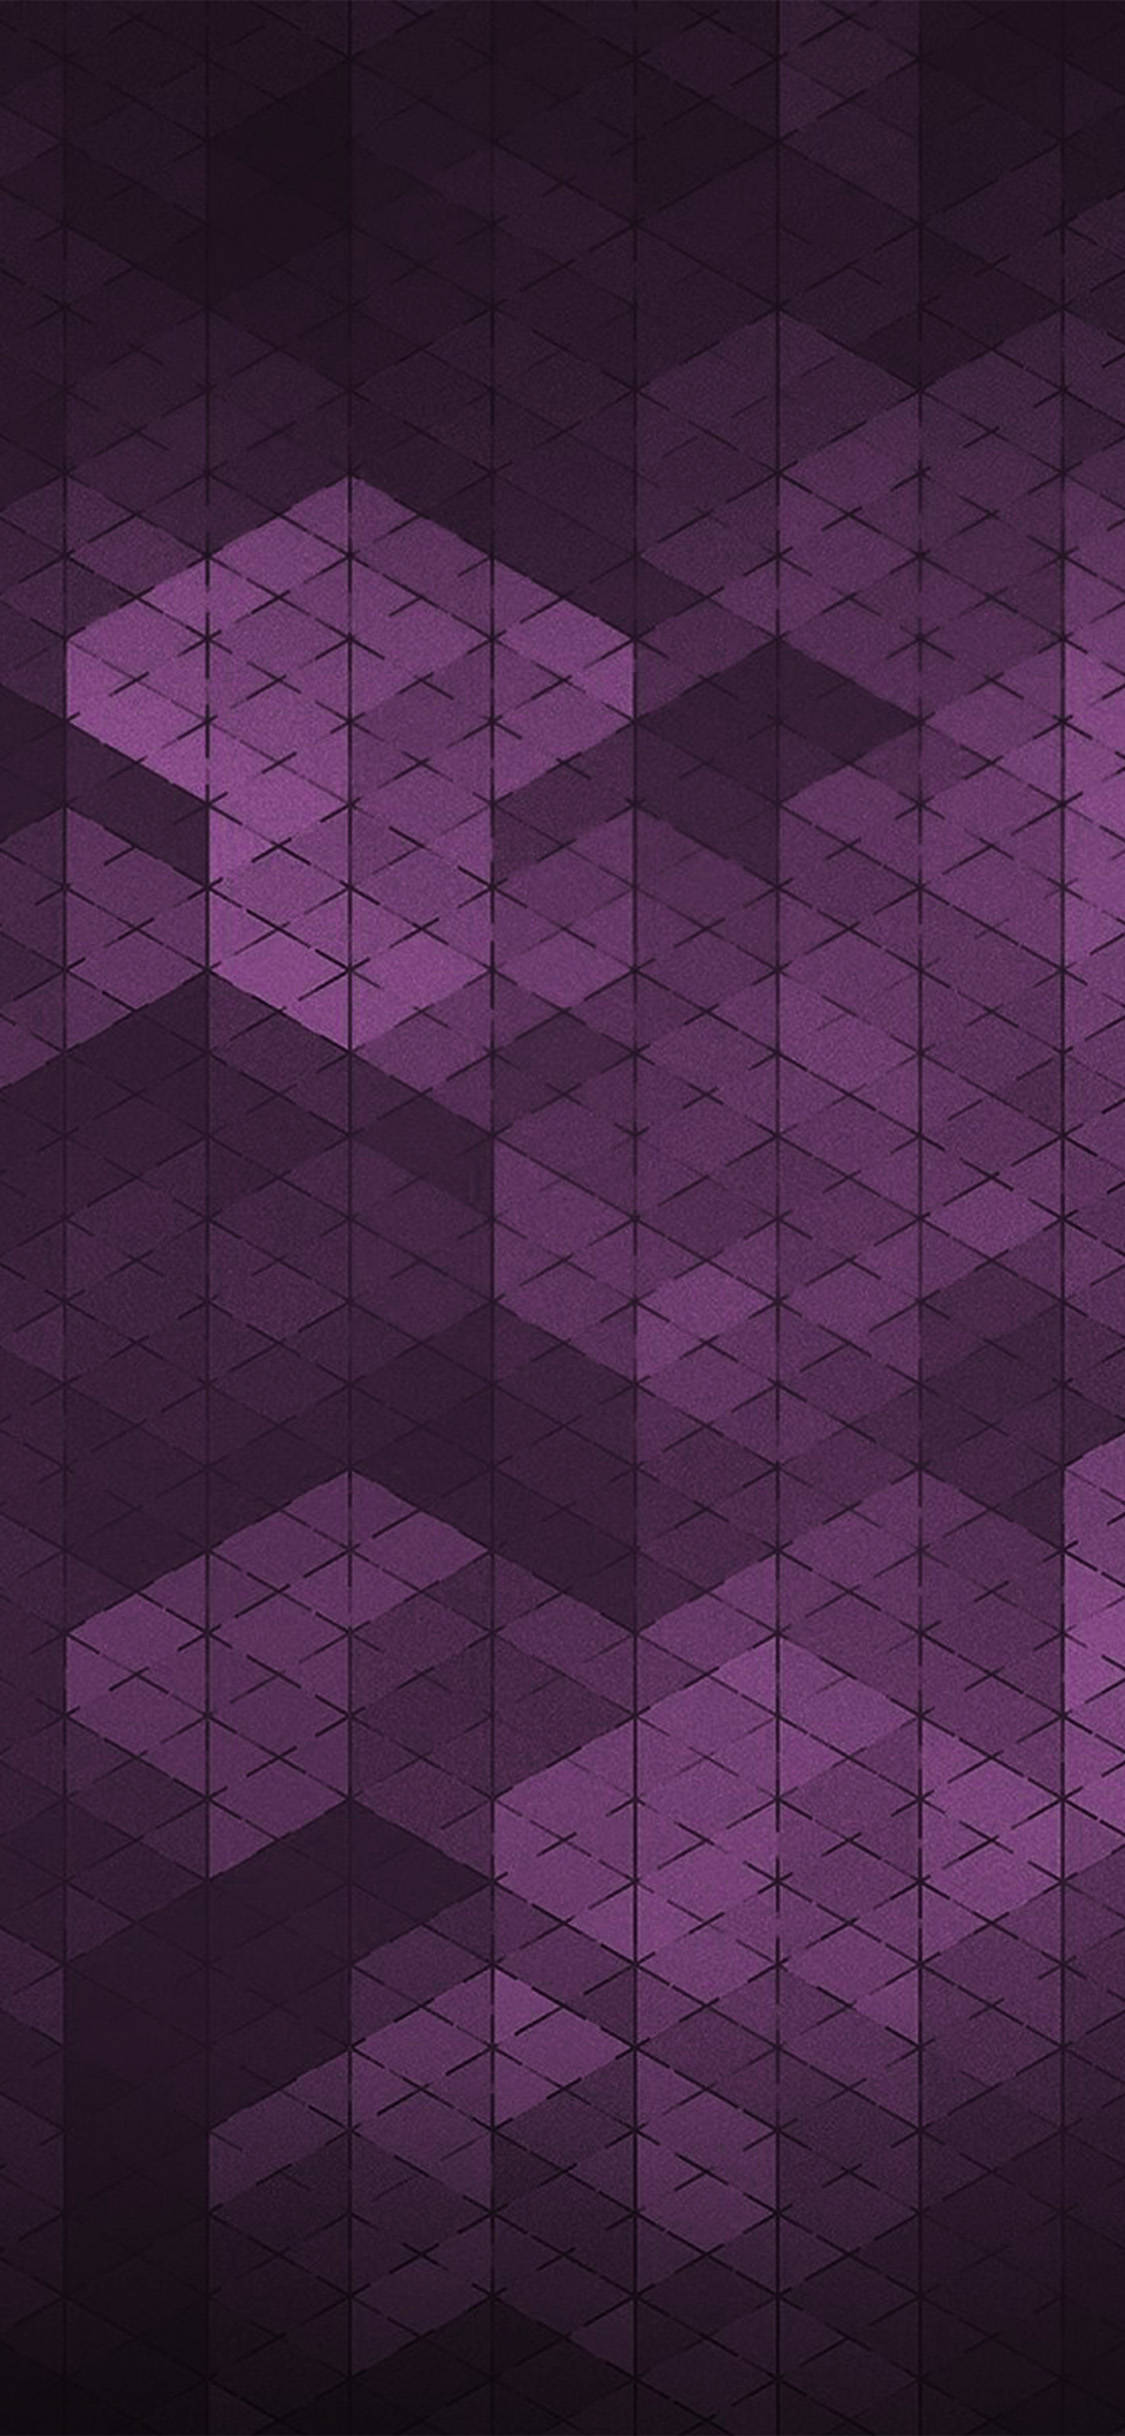 Free Black And Purple Wallpaper Downloads, [100+] Black And Purple  Wallpapers for FREE 